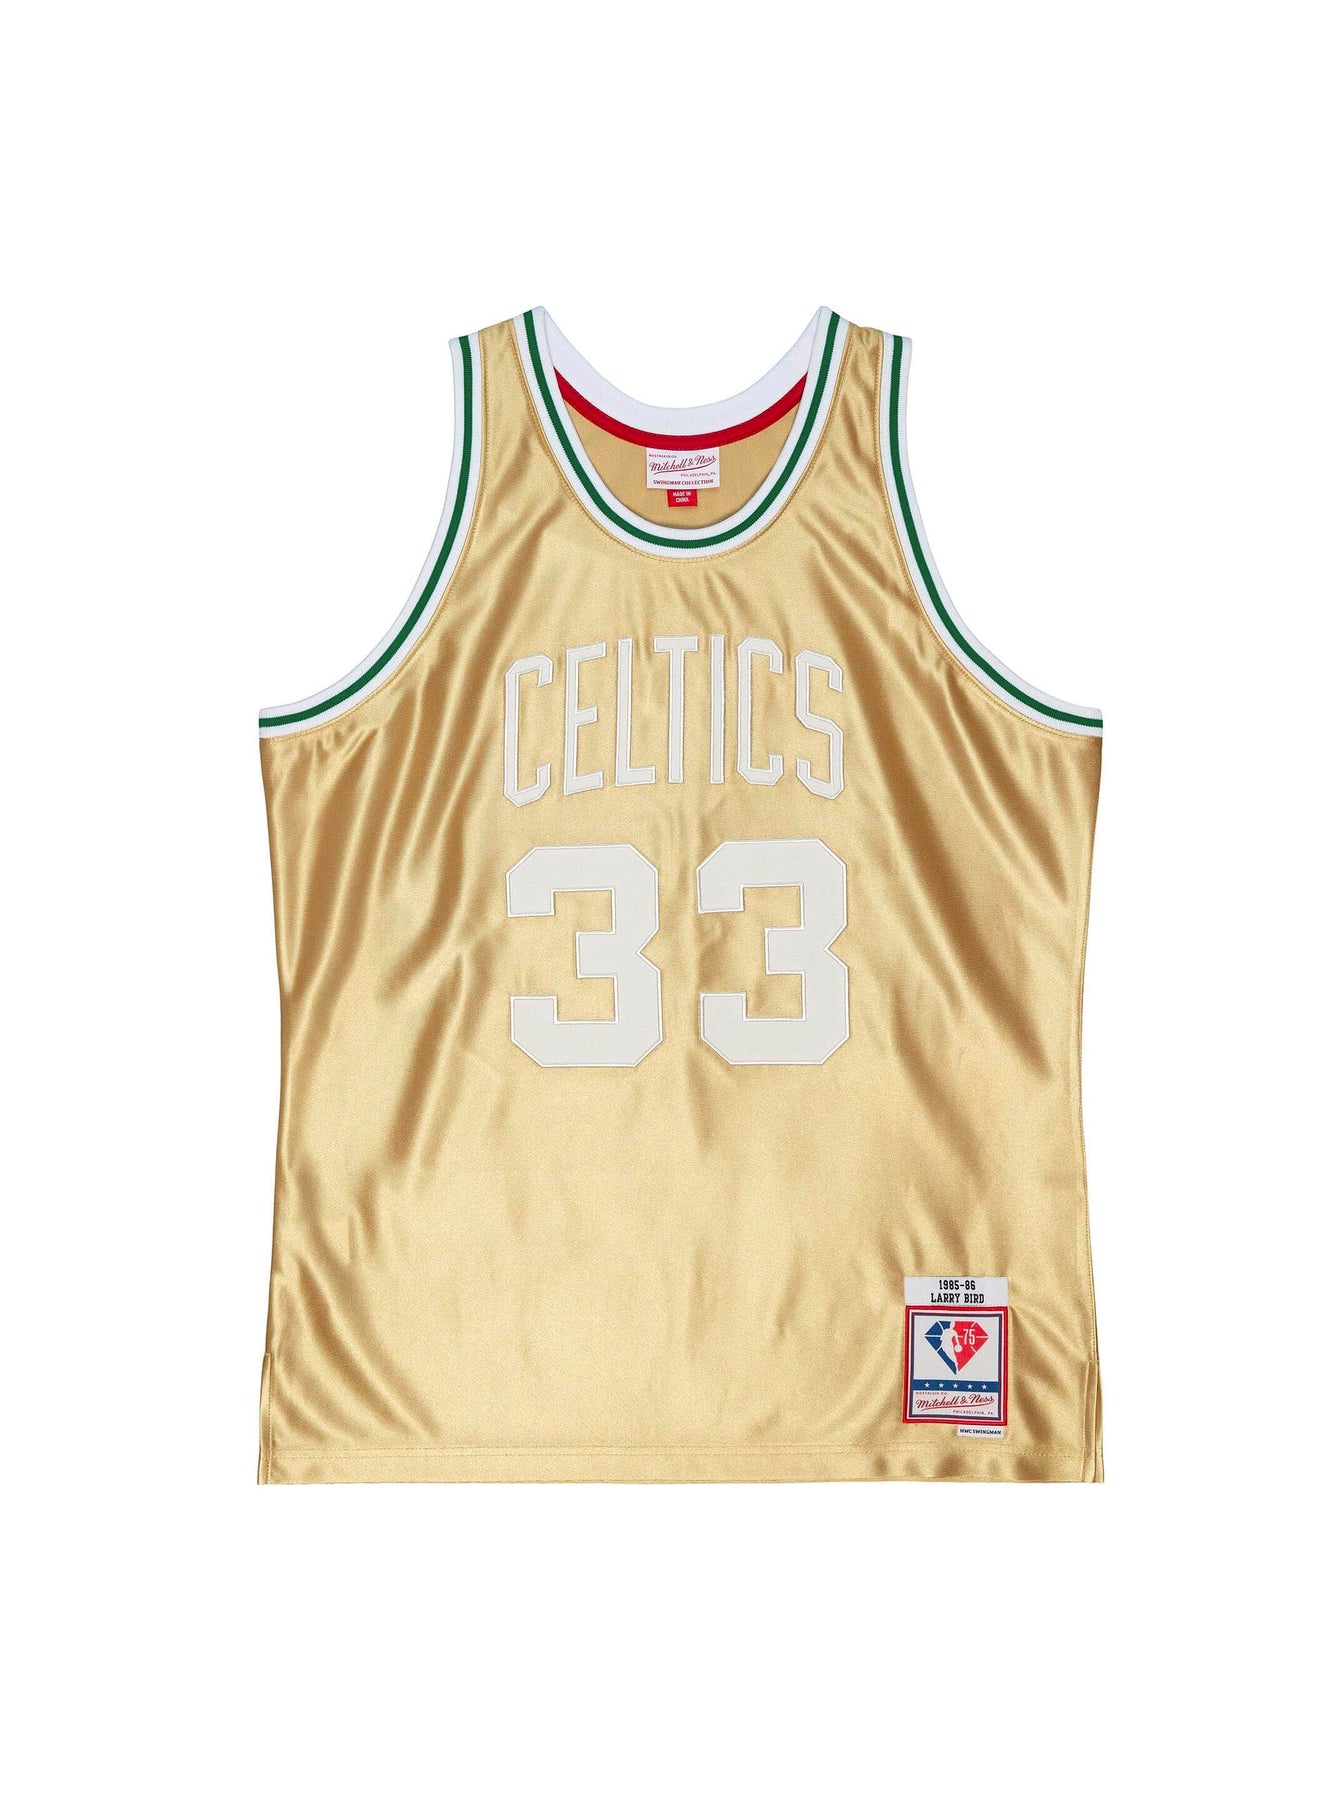 Boston Celtics Authentic Jerseys, Authentic Hardwood Classic Jersey, Celtics  Authentic Player Jerseys